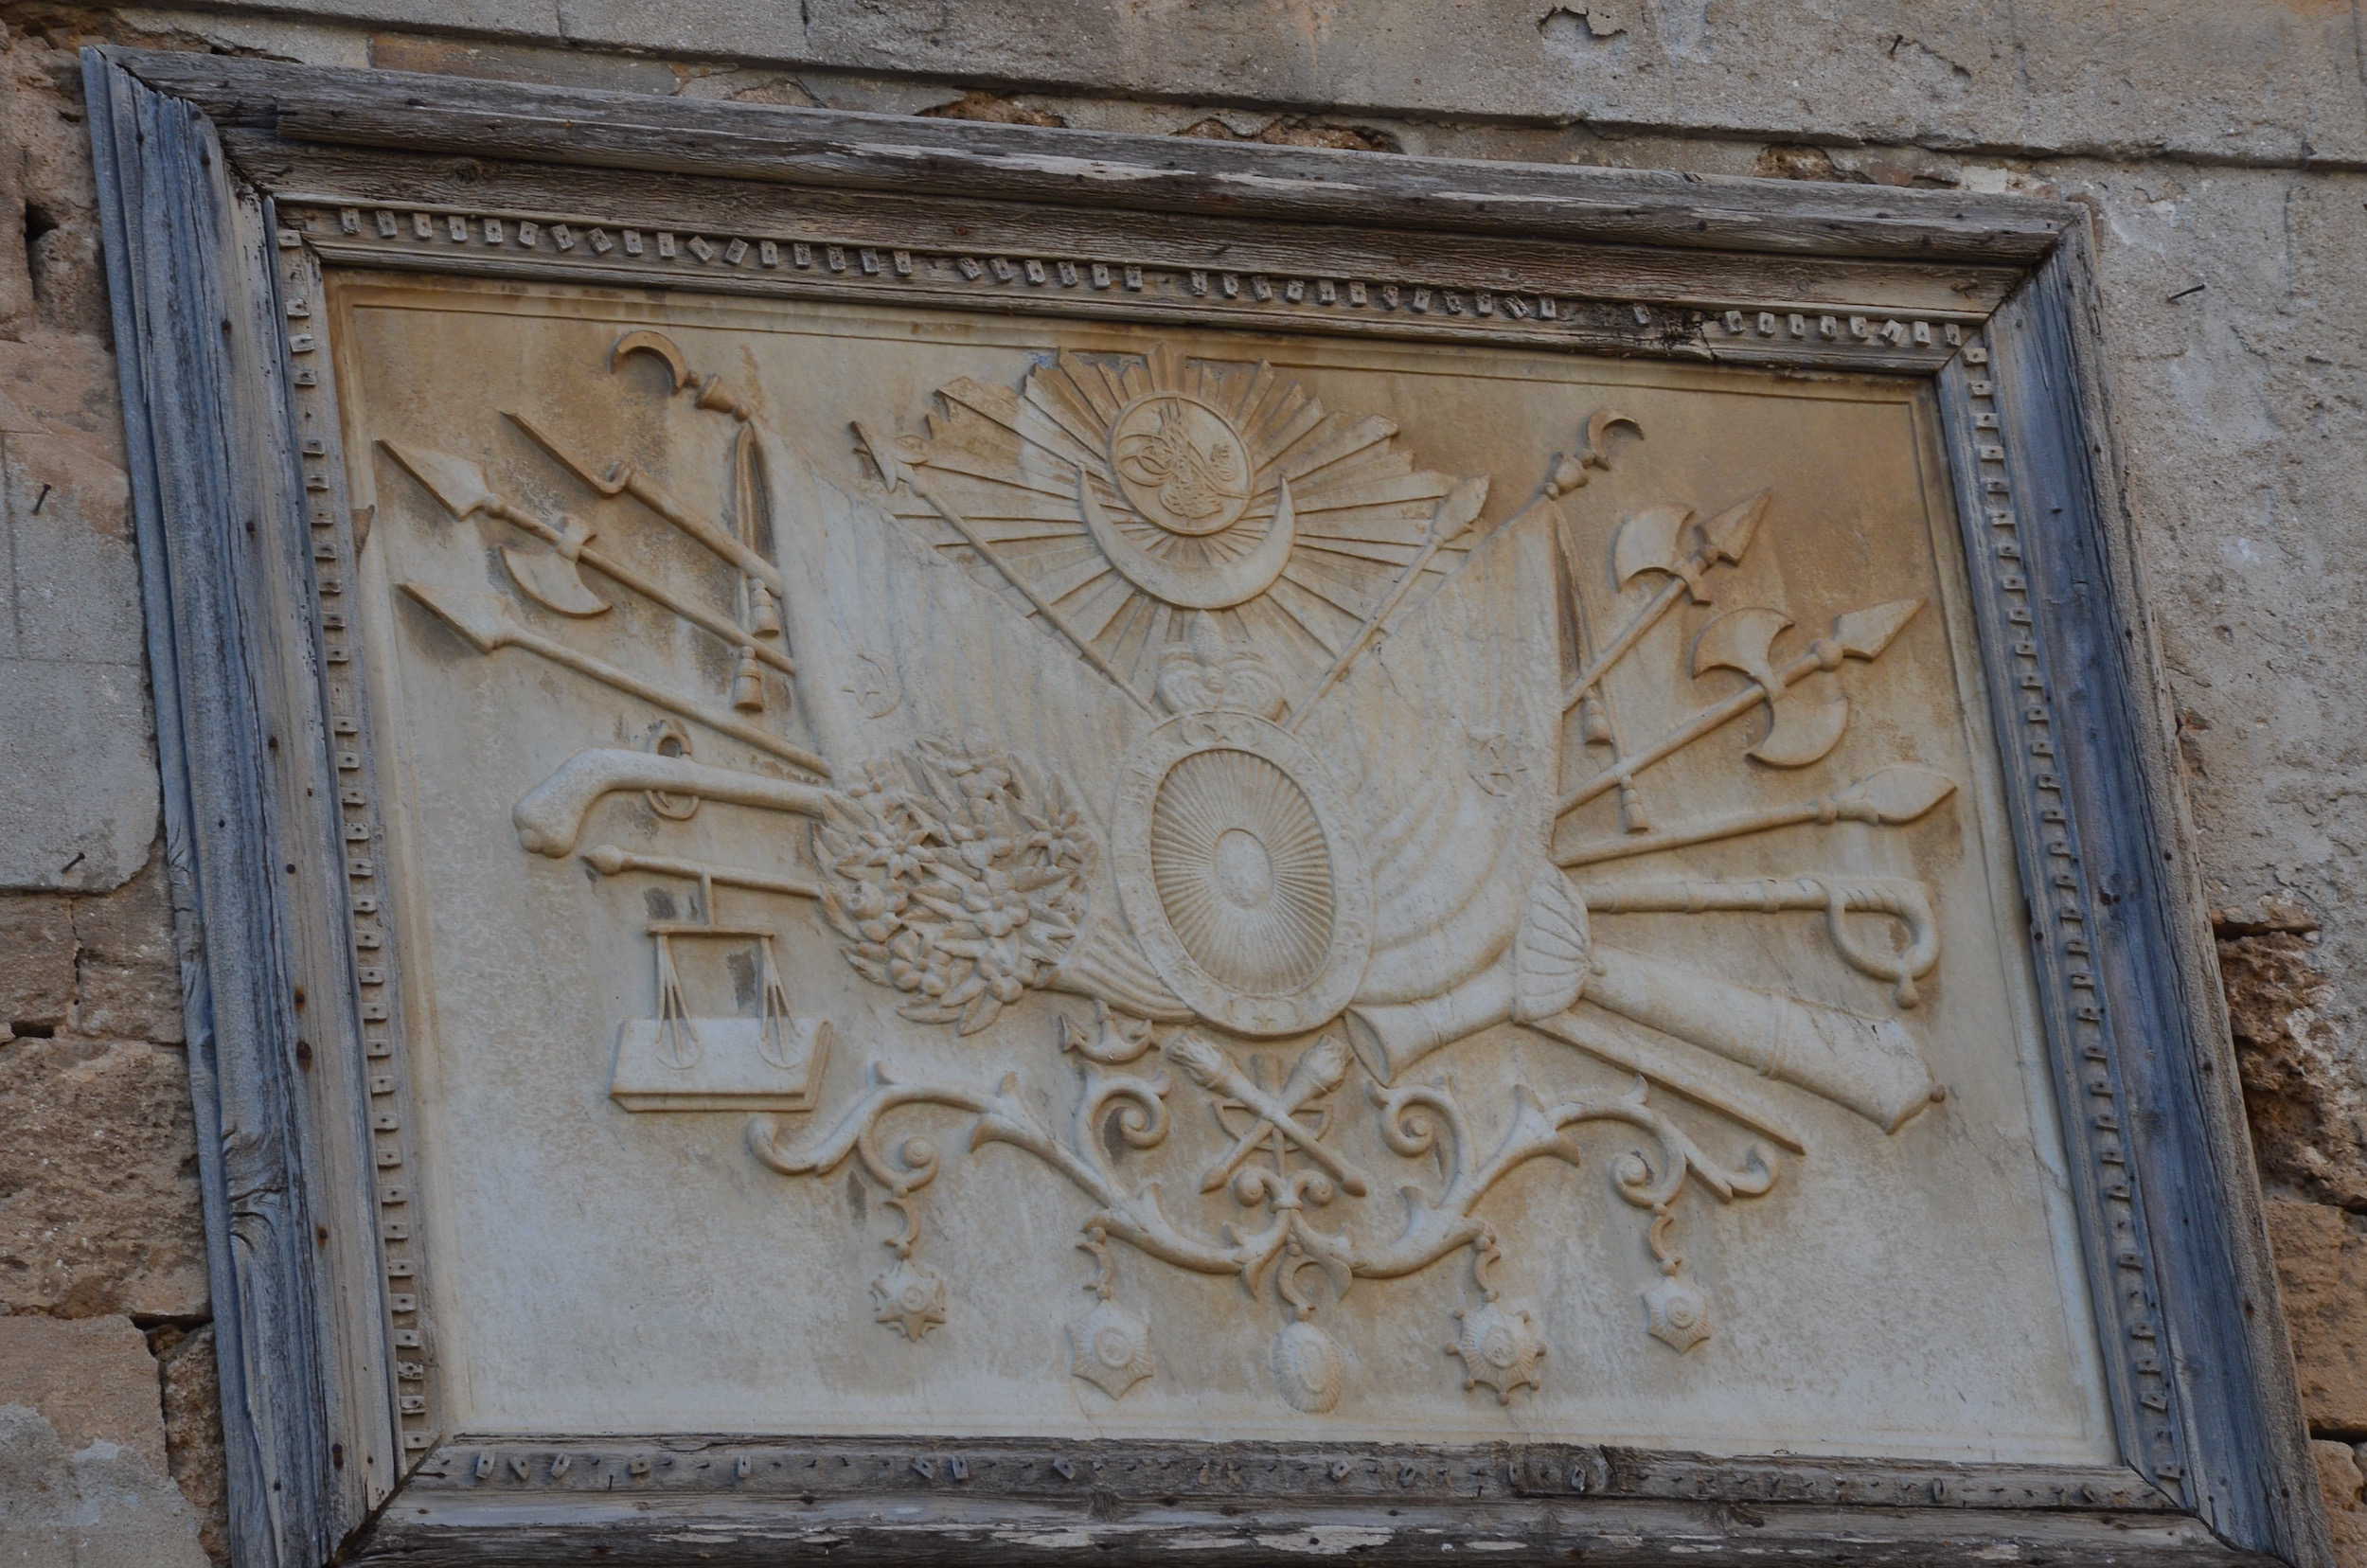 Ottoman coat of arms on the clock tower on Khan al-Umdan in Acre, Israel